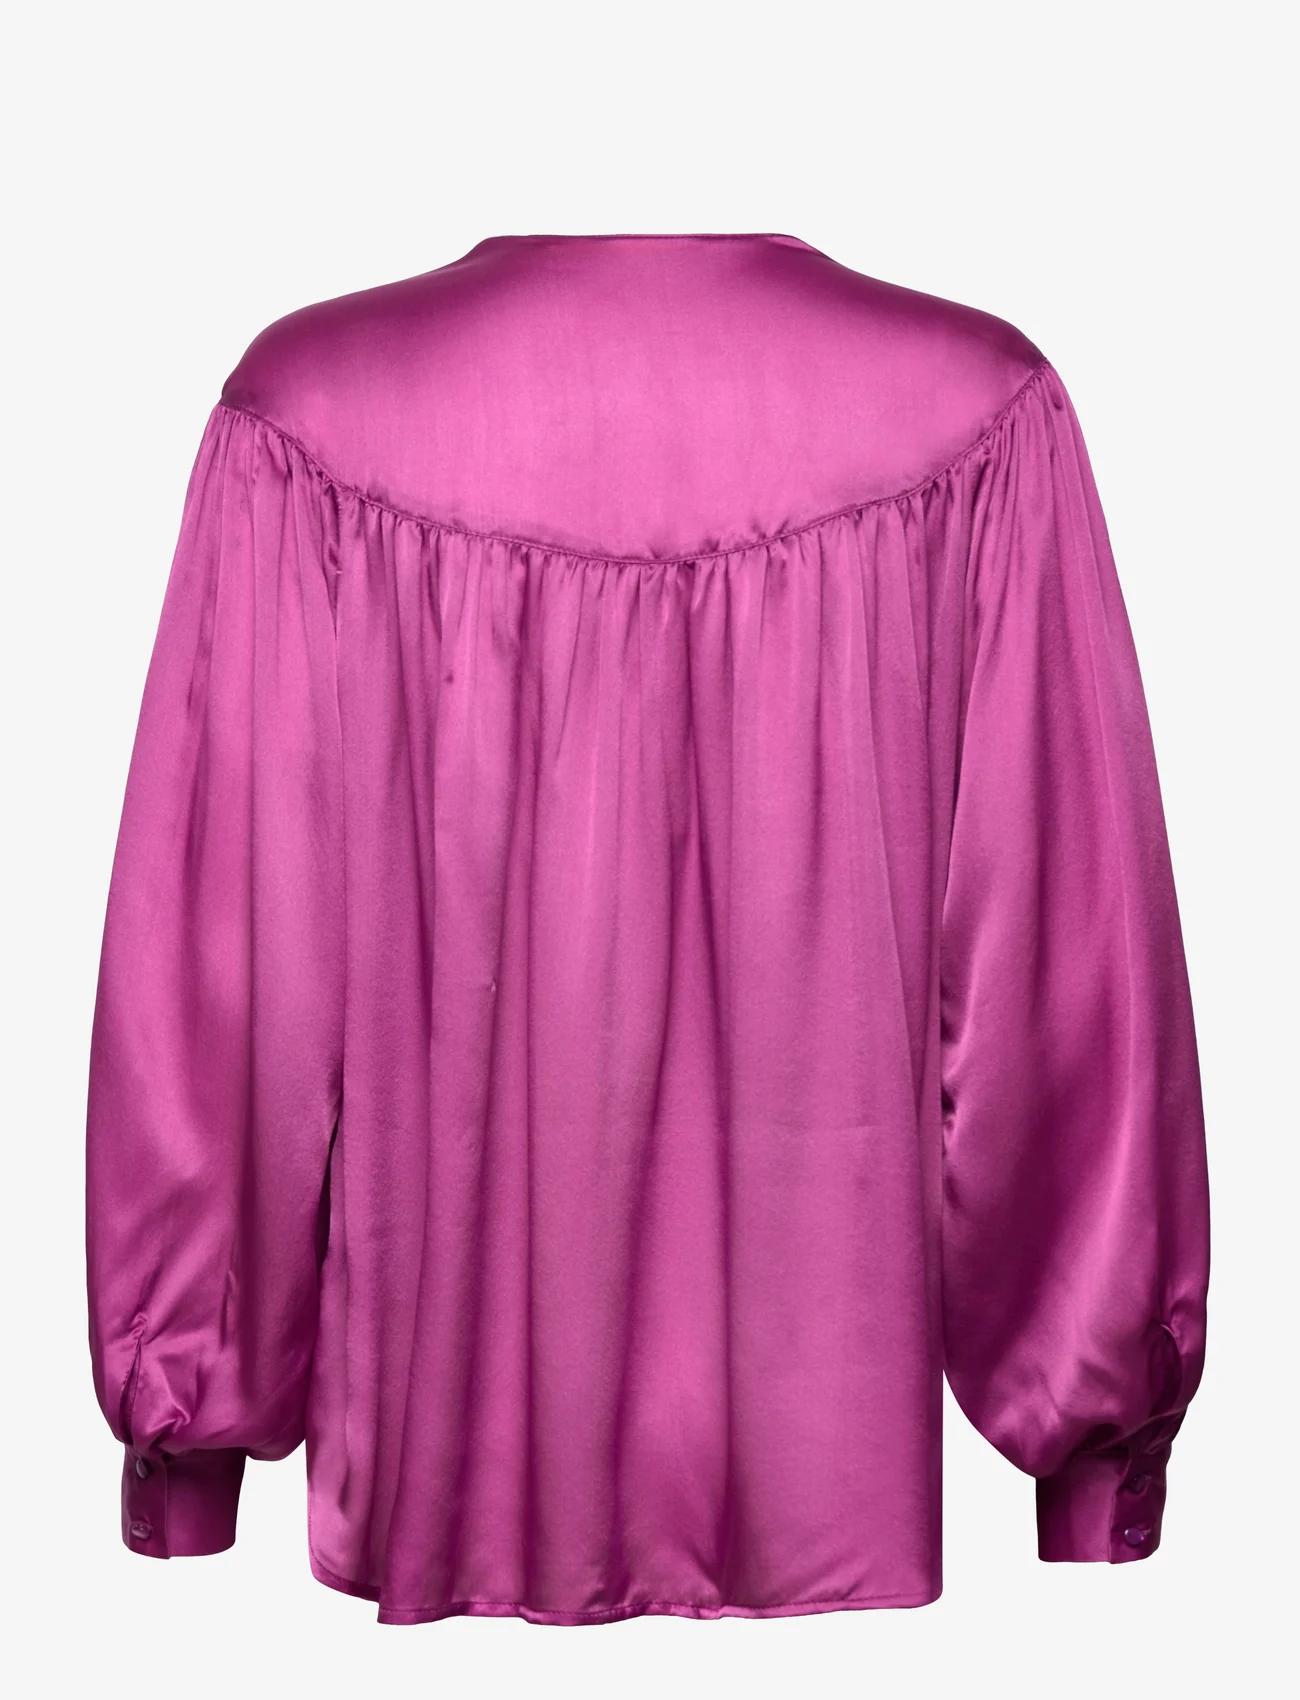 Britt Sisseck - Murcia - long-sleeved blouses - pink carmine - 1